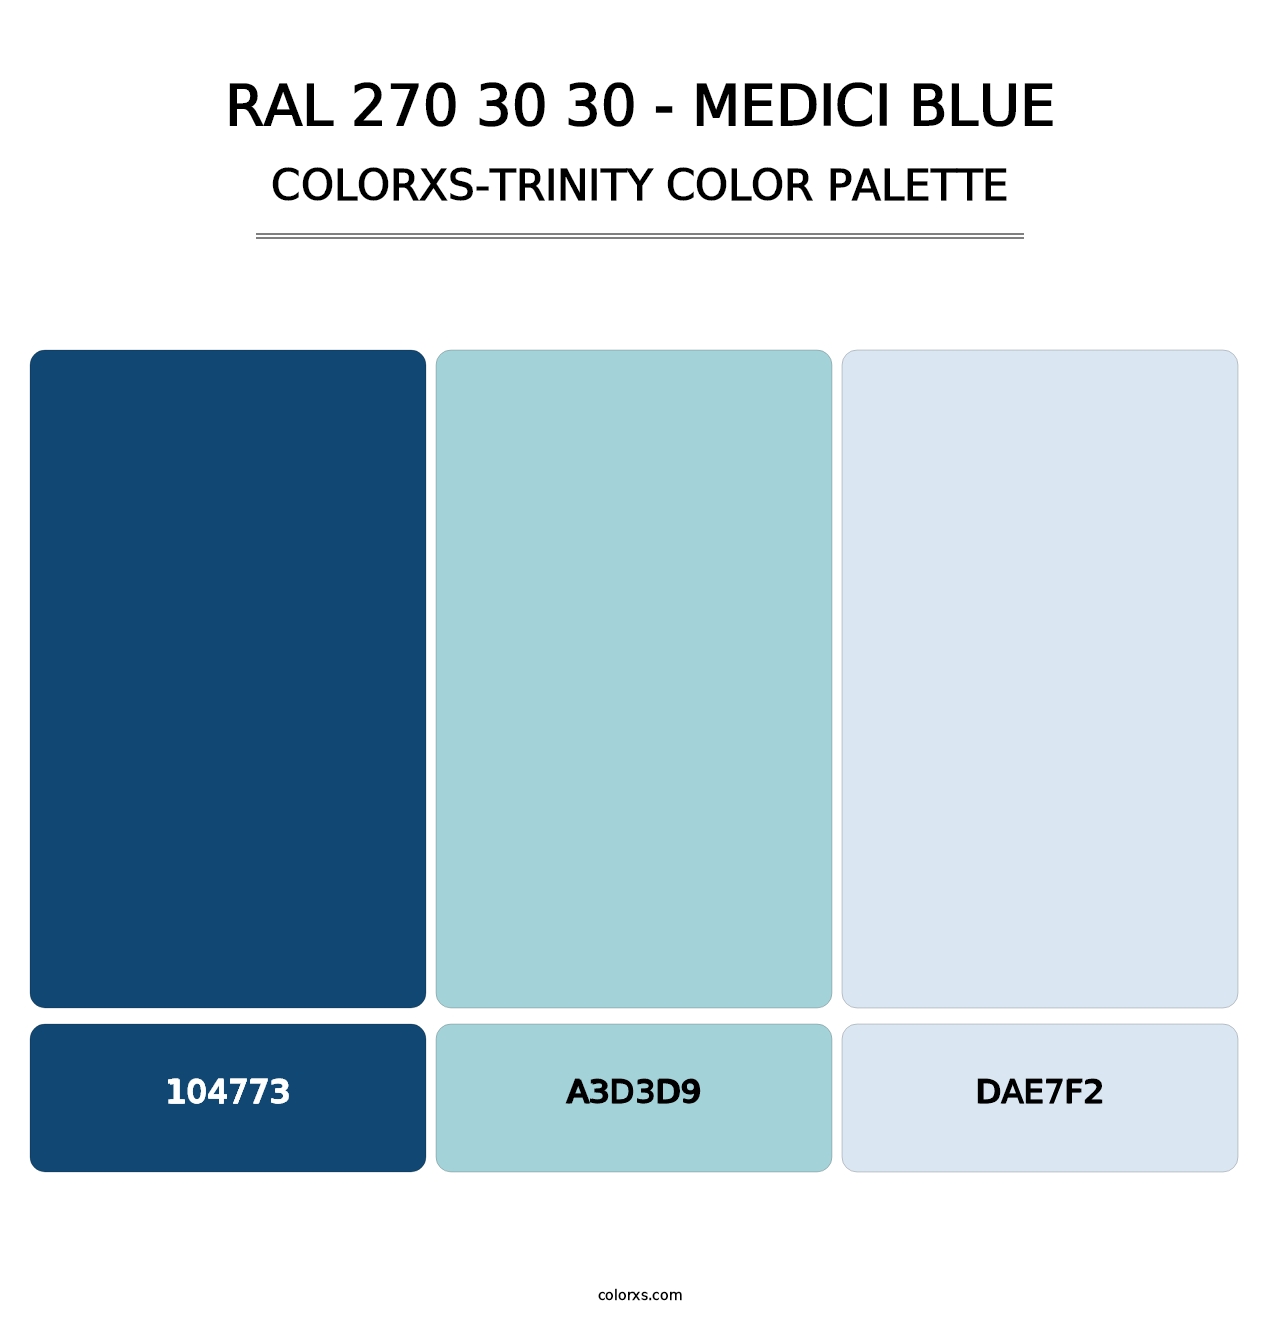 RAL 270 30 30 - Medici Blue - Colorxs Trinity Palette